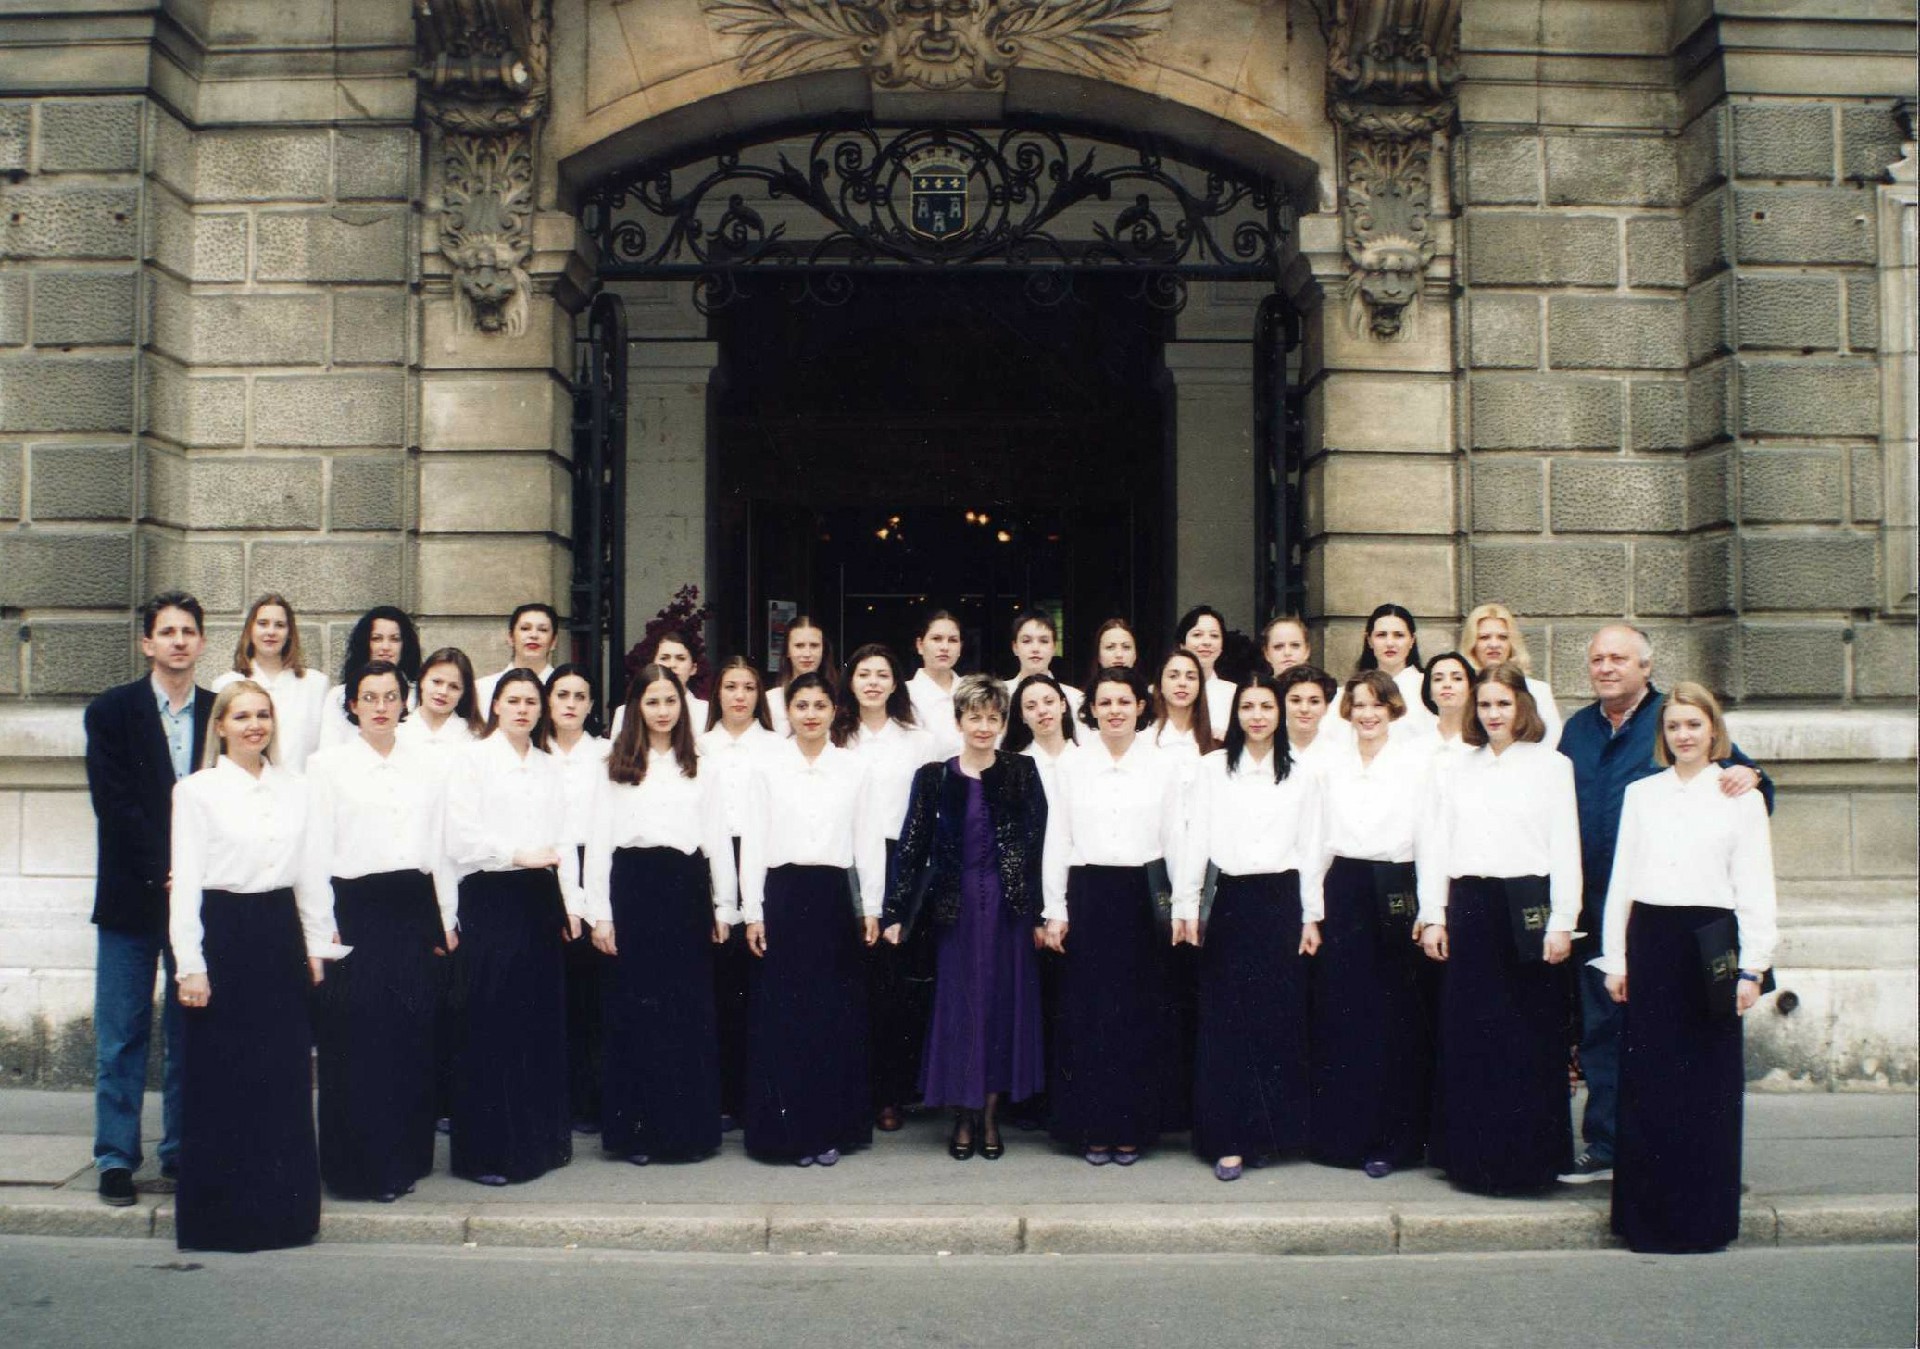 Међународни хорски конкурс Florilège Vocal de Tour, Француска 1997.